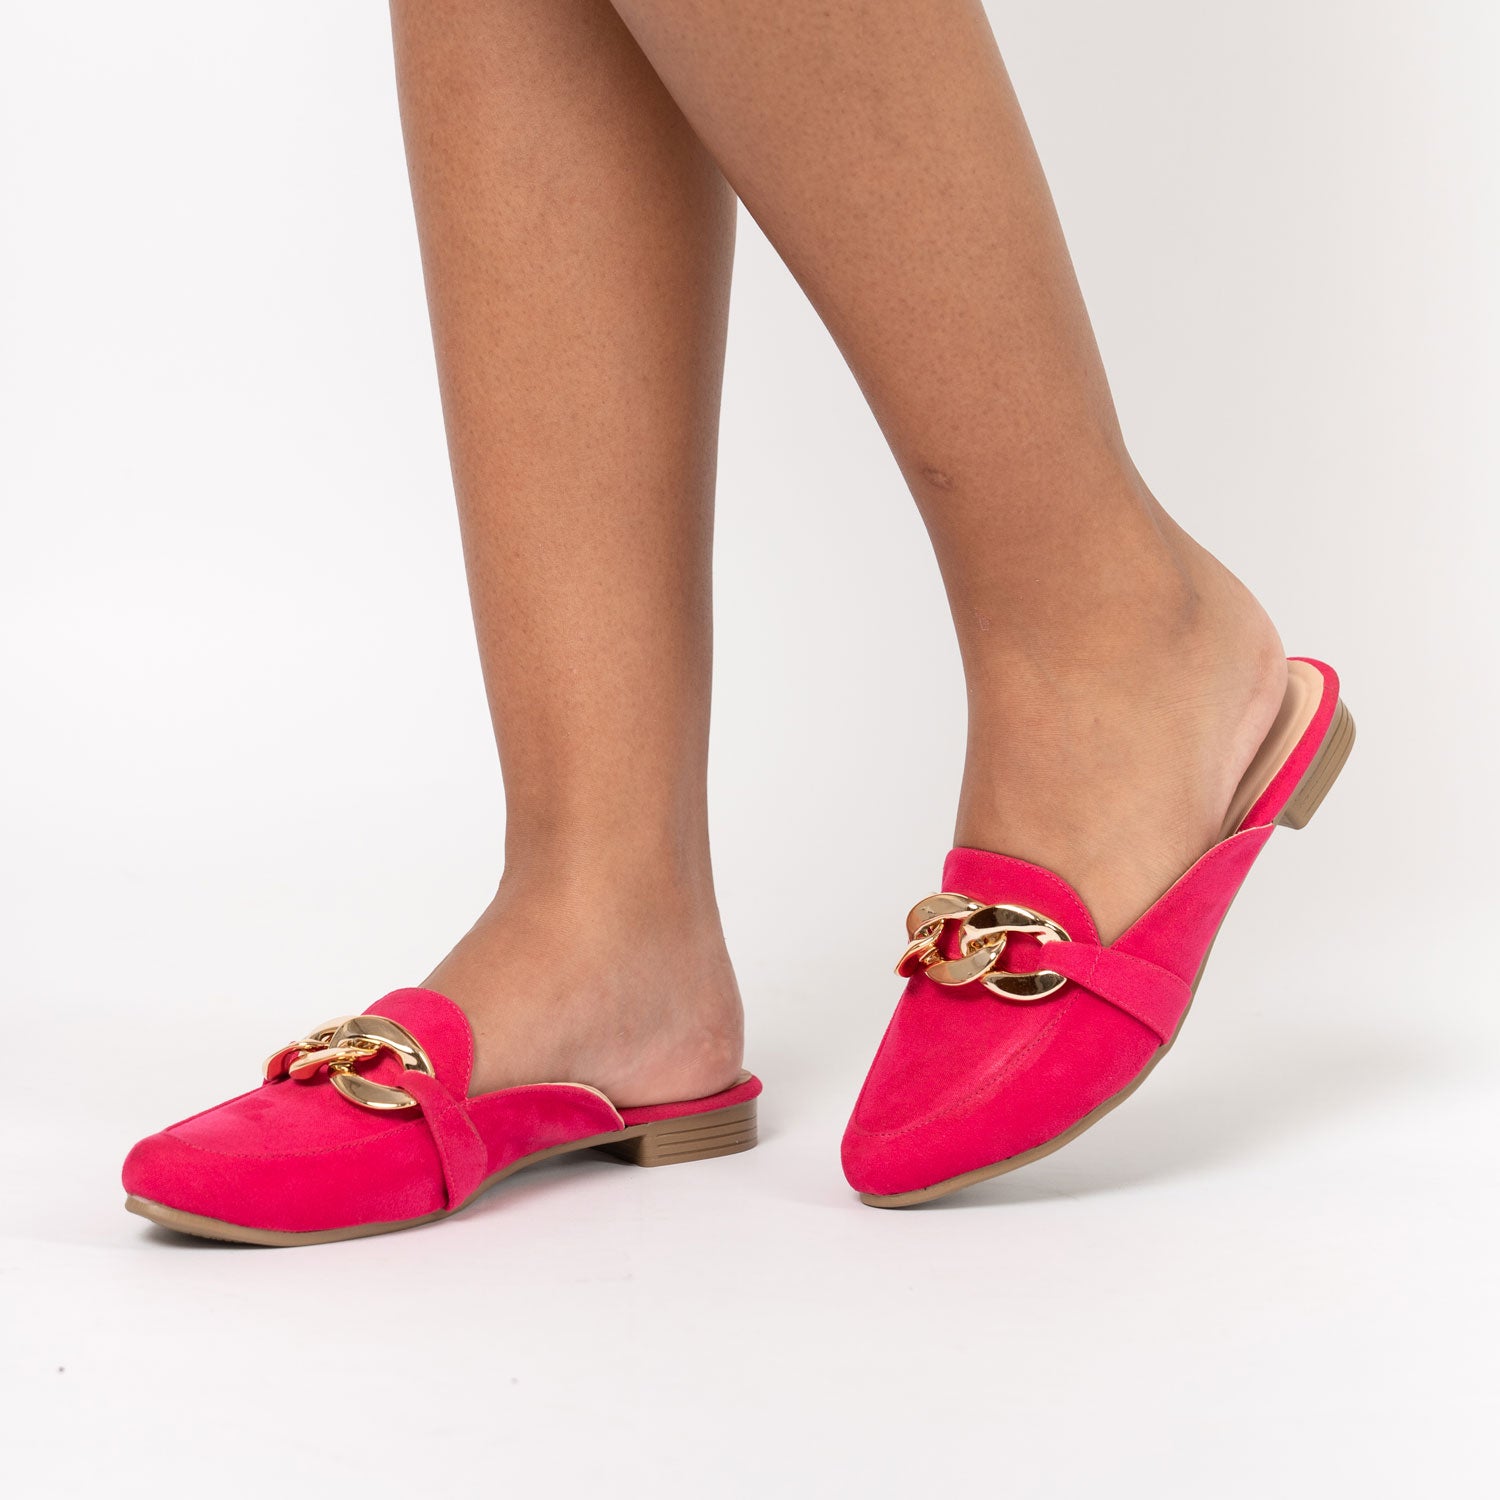 Zapatos Mules Mujer Maxi Cadena Fuxia – Shoes